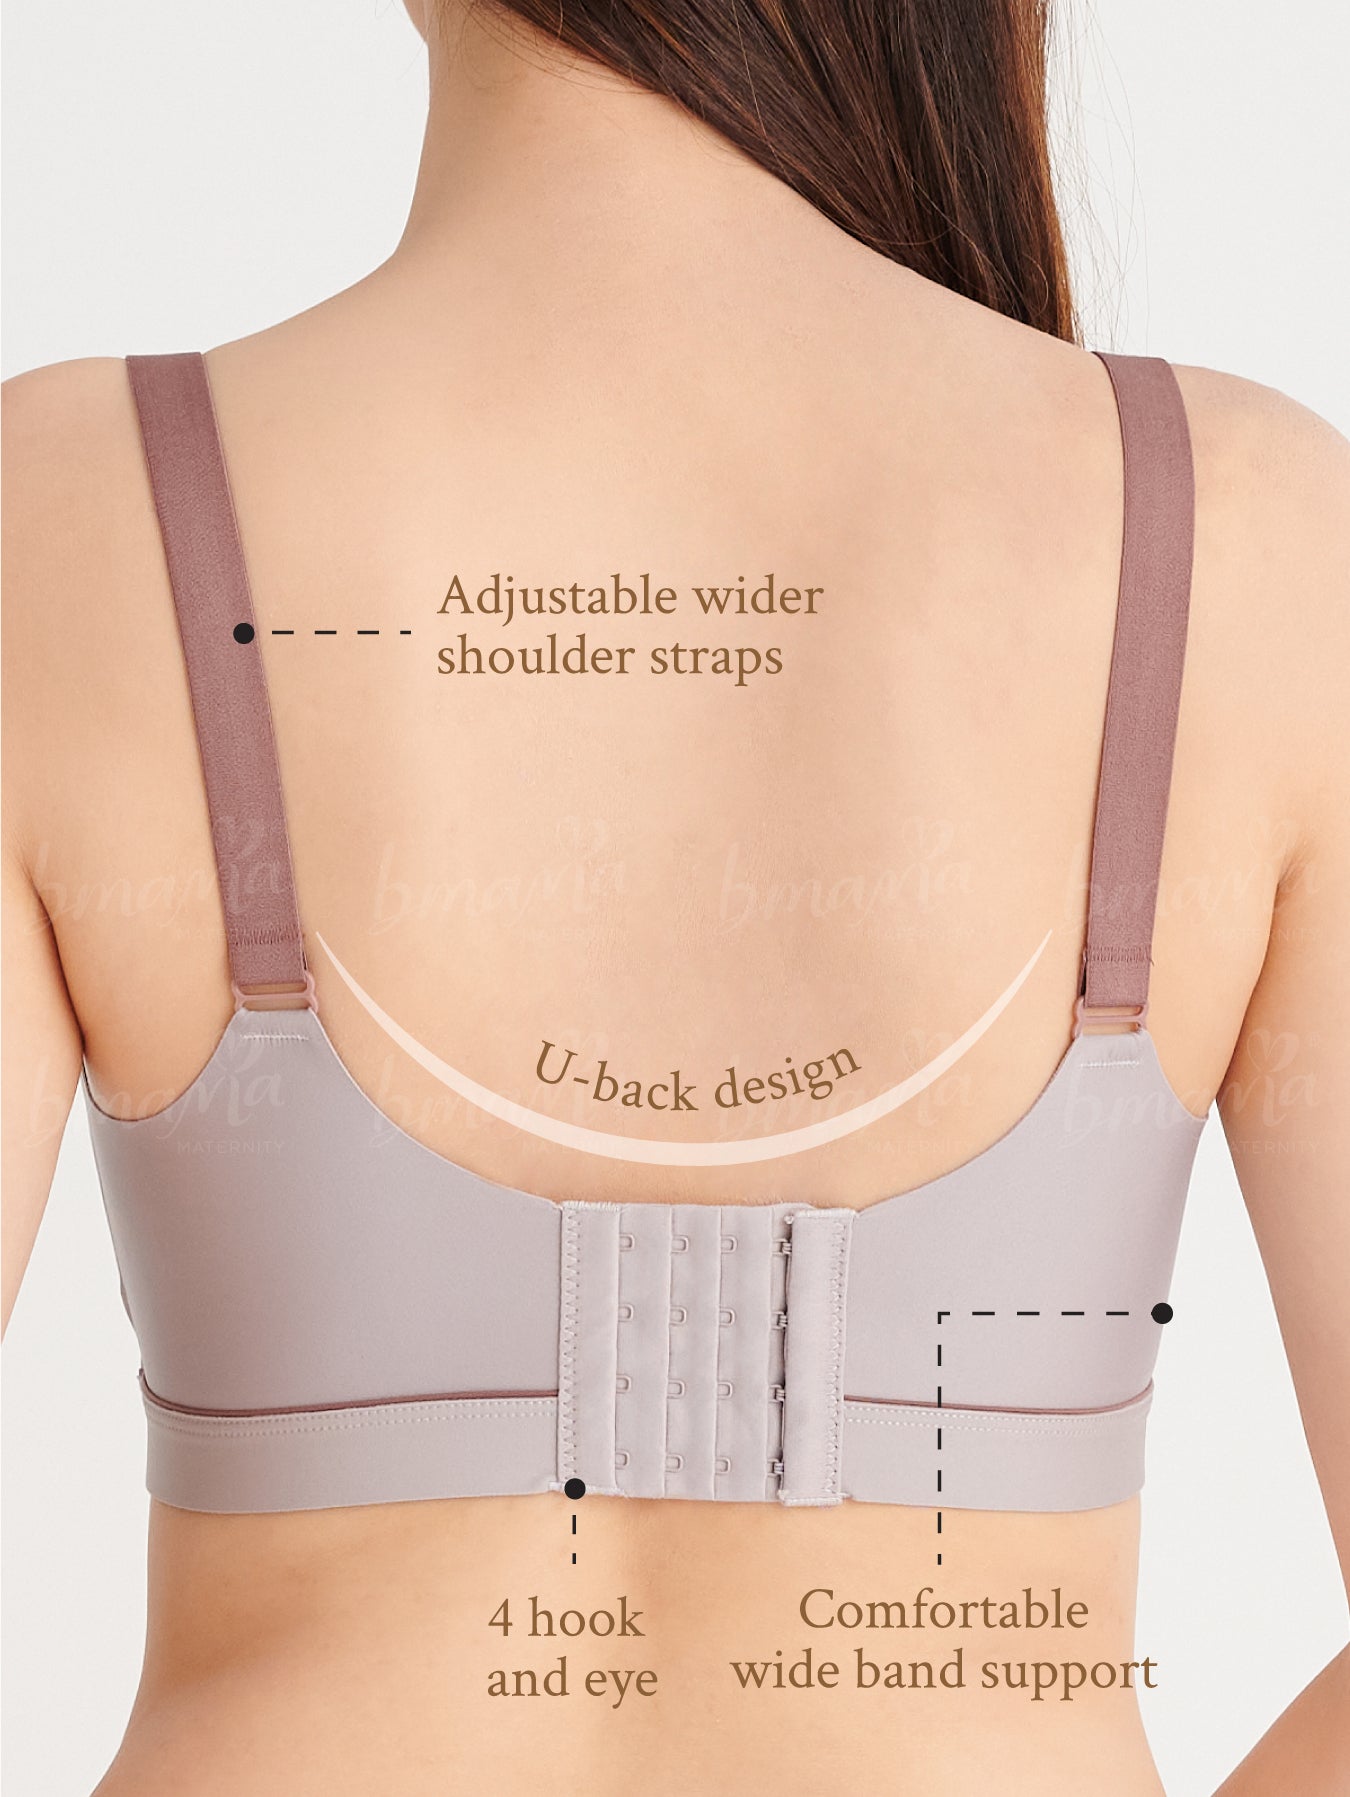 Nursing bra with adjustable straps